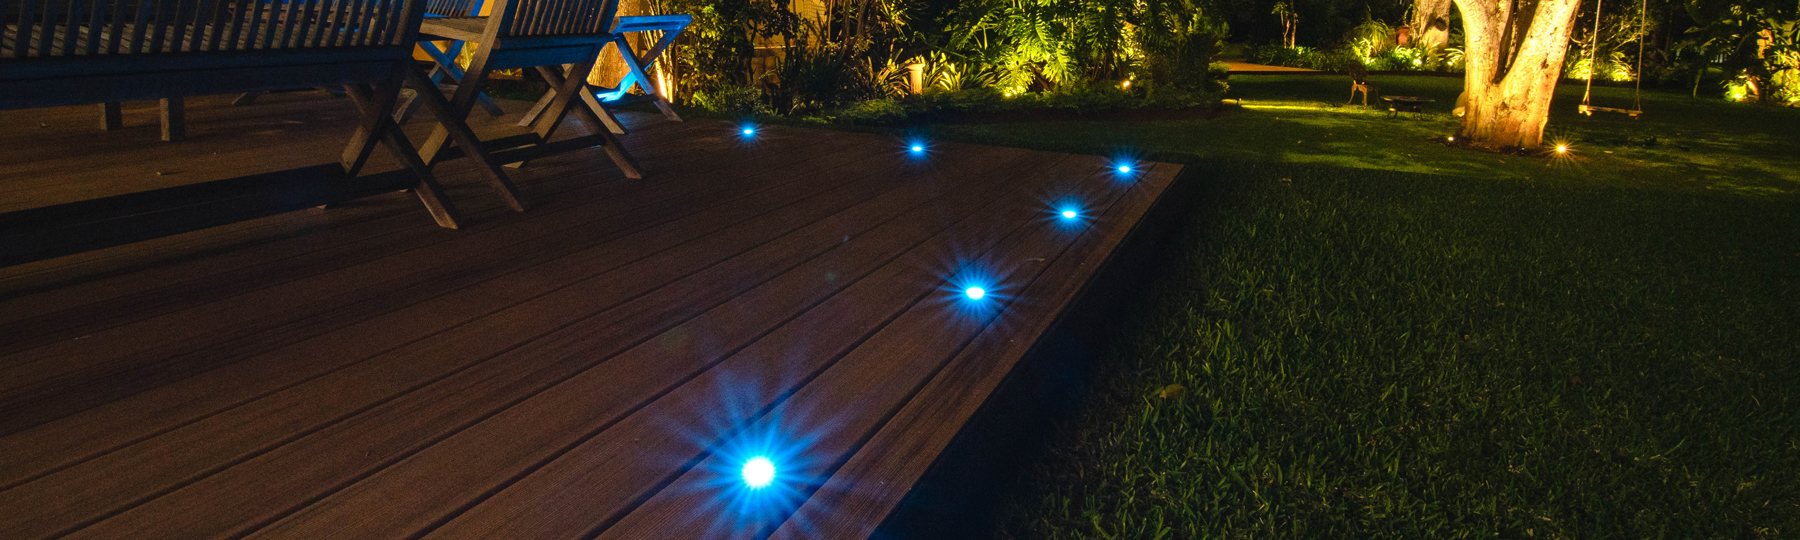 installing deck lights yourself header